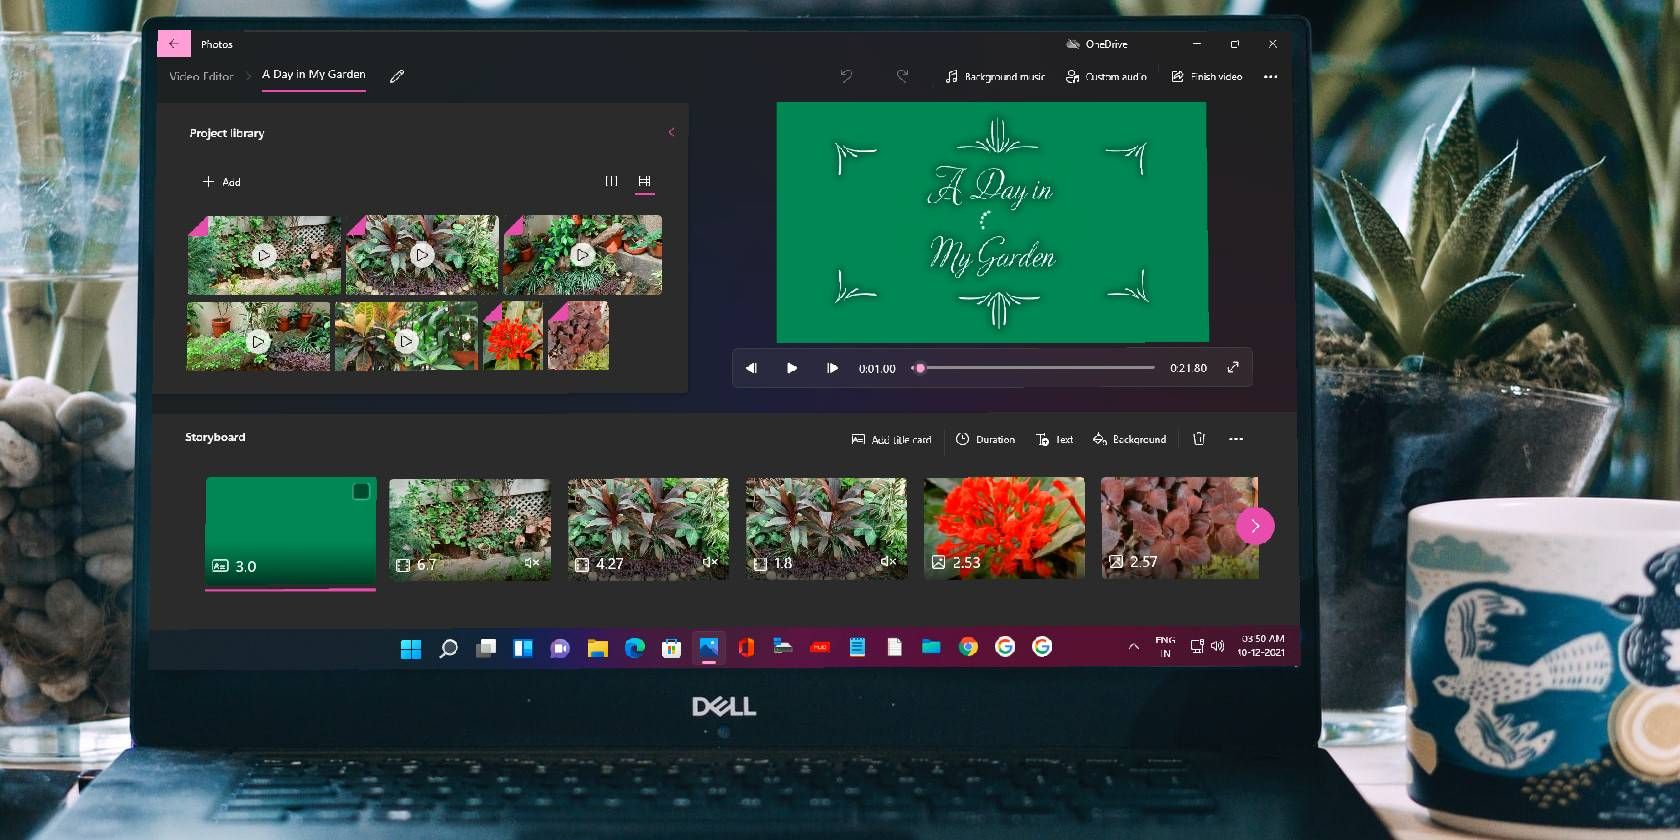 Laptop screen showing Windows Photos app